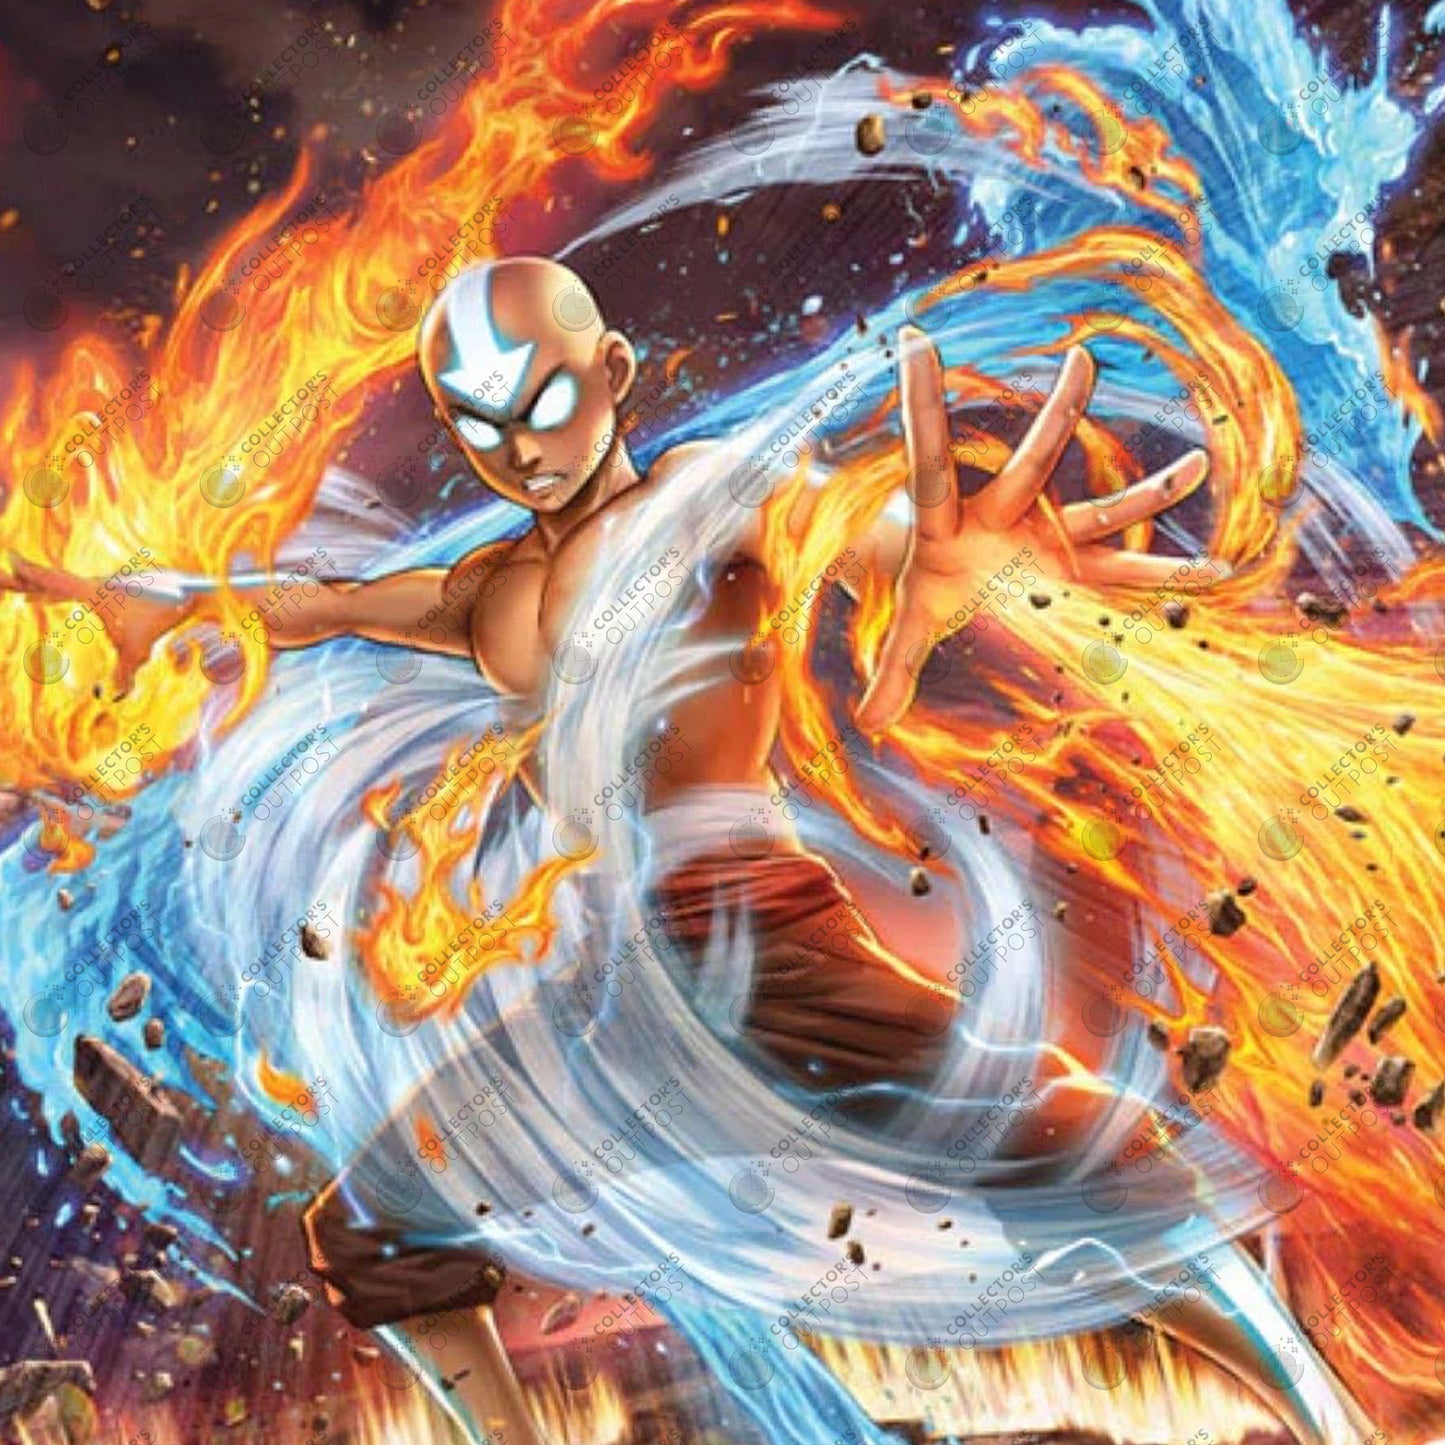 Aang "The Ultimate Price" Avatar: The Last Airbender Premium Art Print